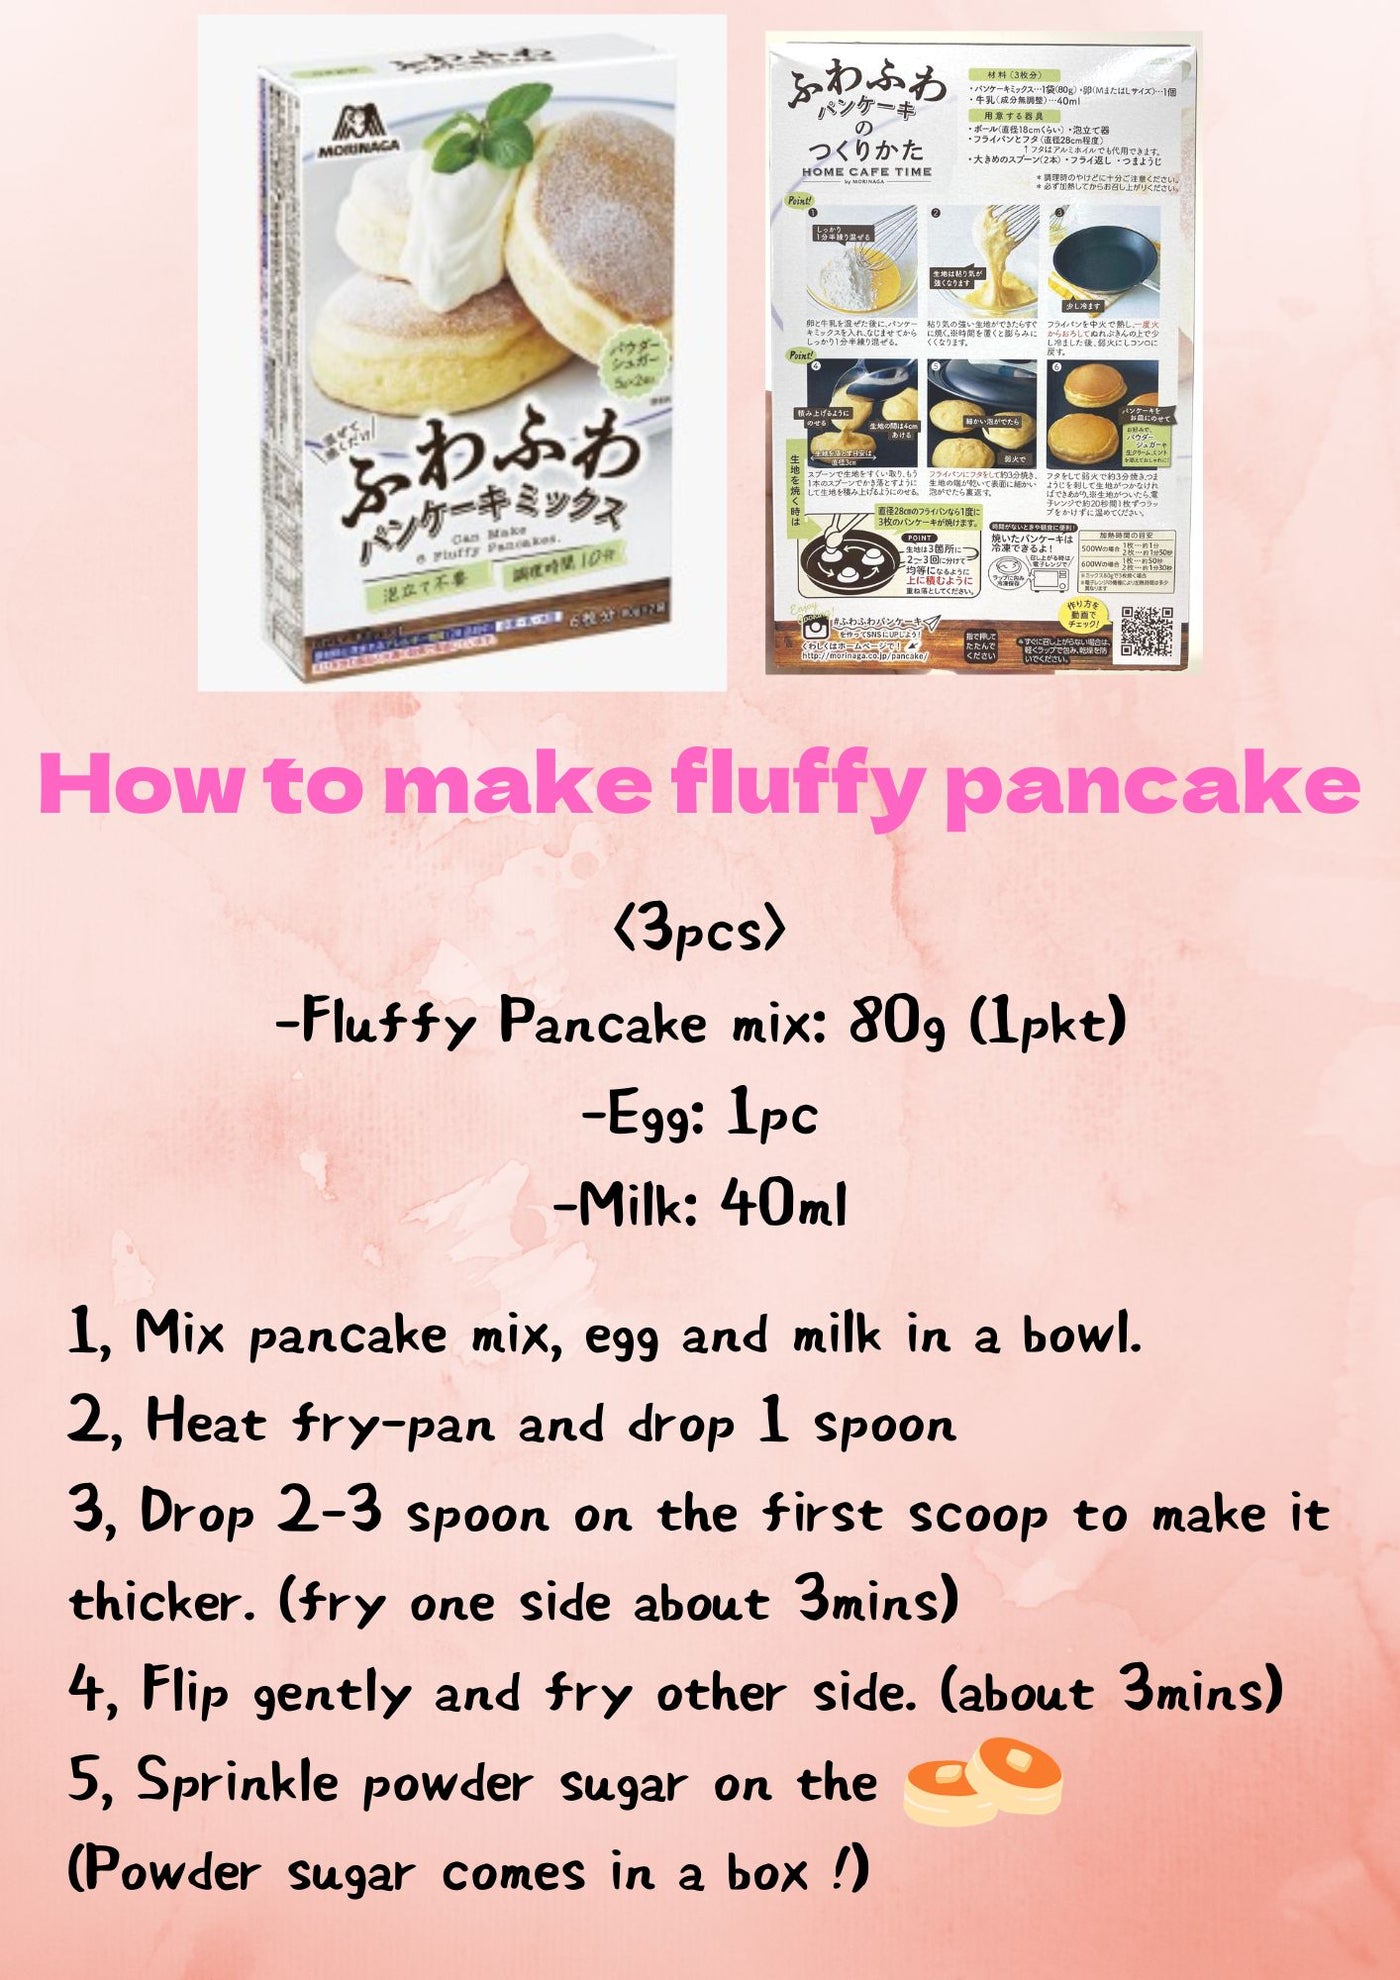 “Morinaga” Fluffy Pancake Mix